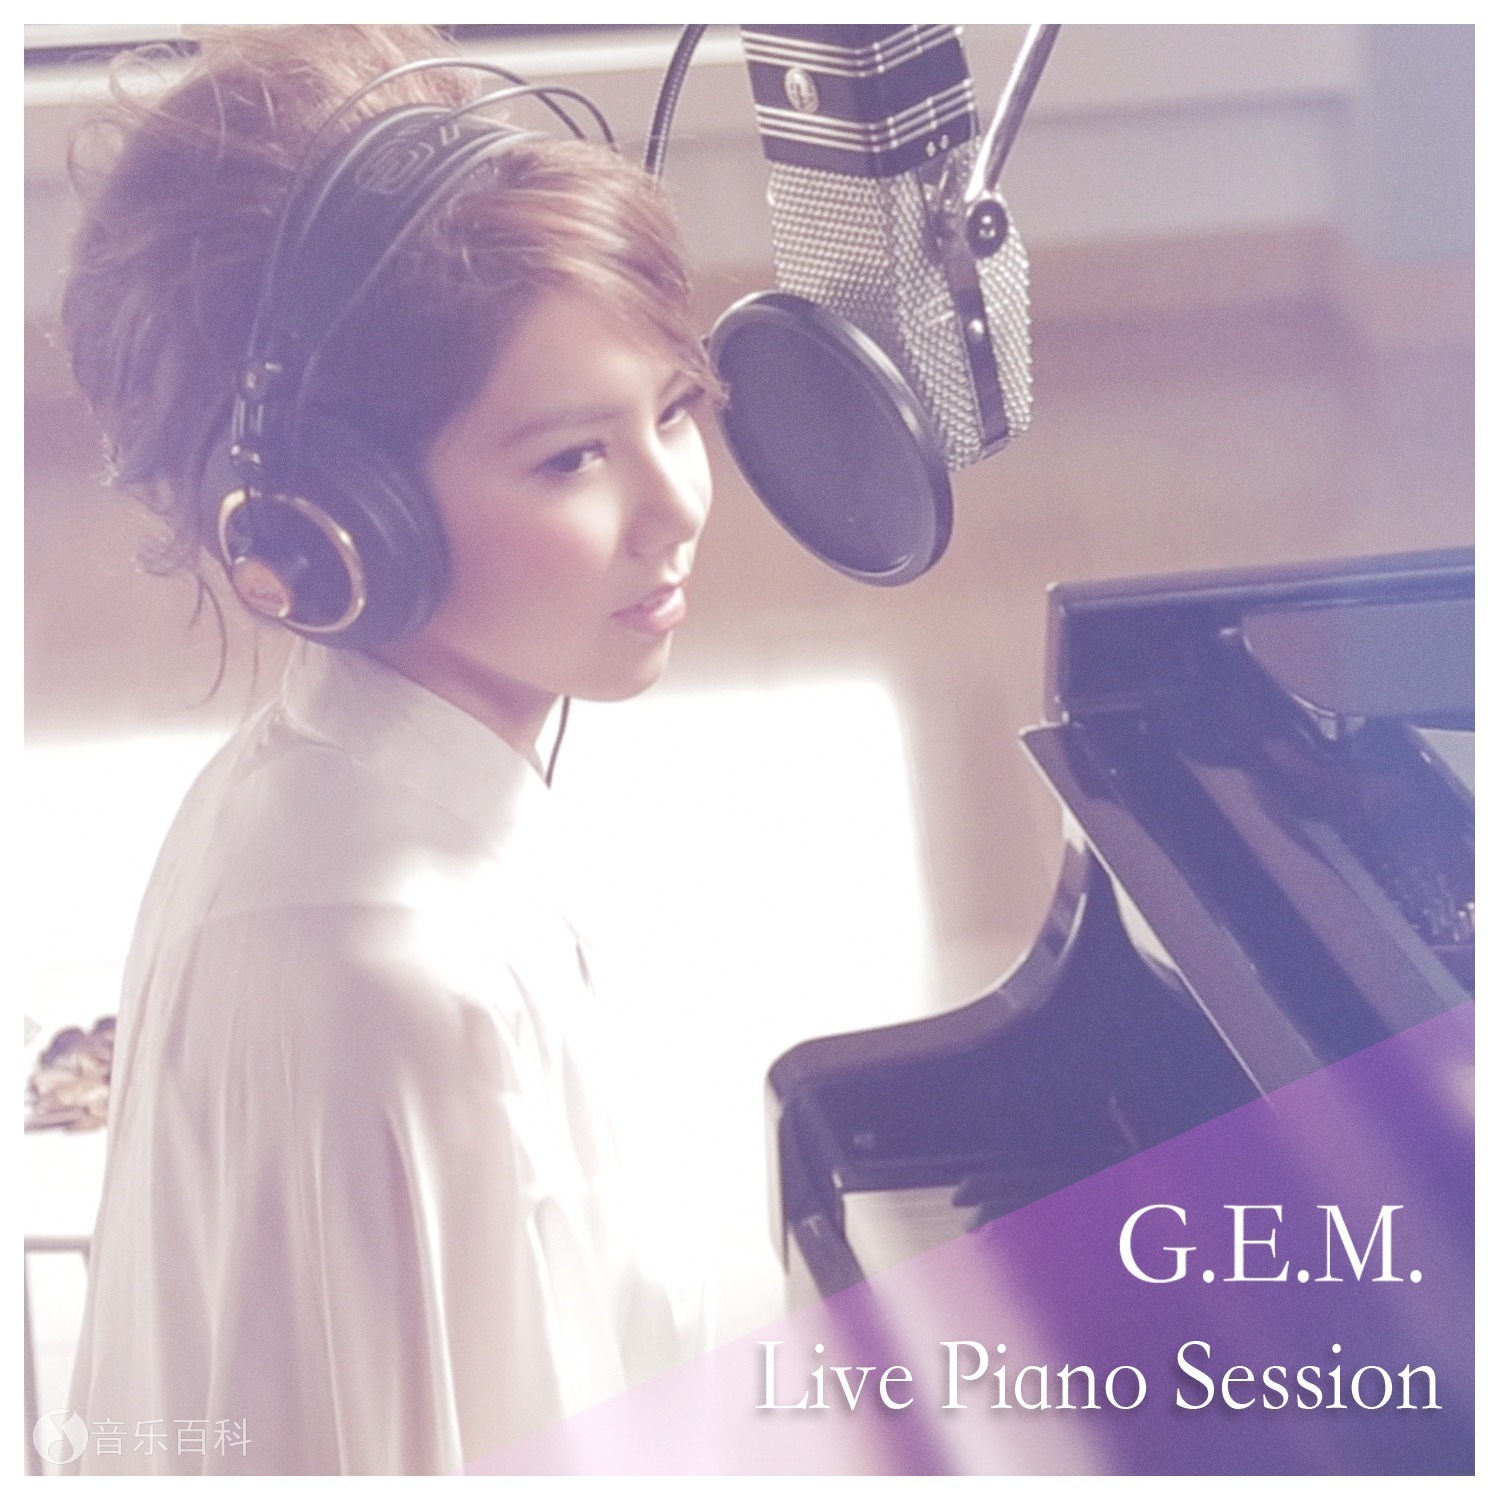 G.E.M. Live Piano Session